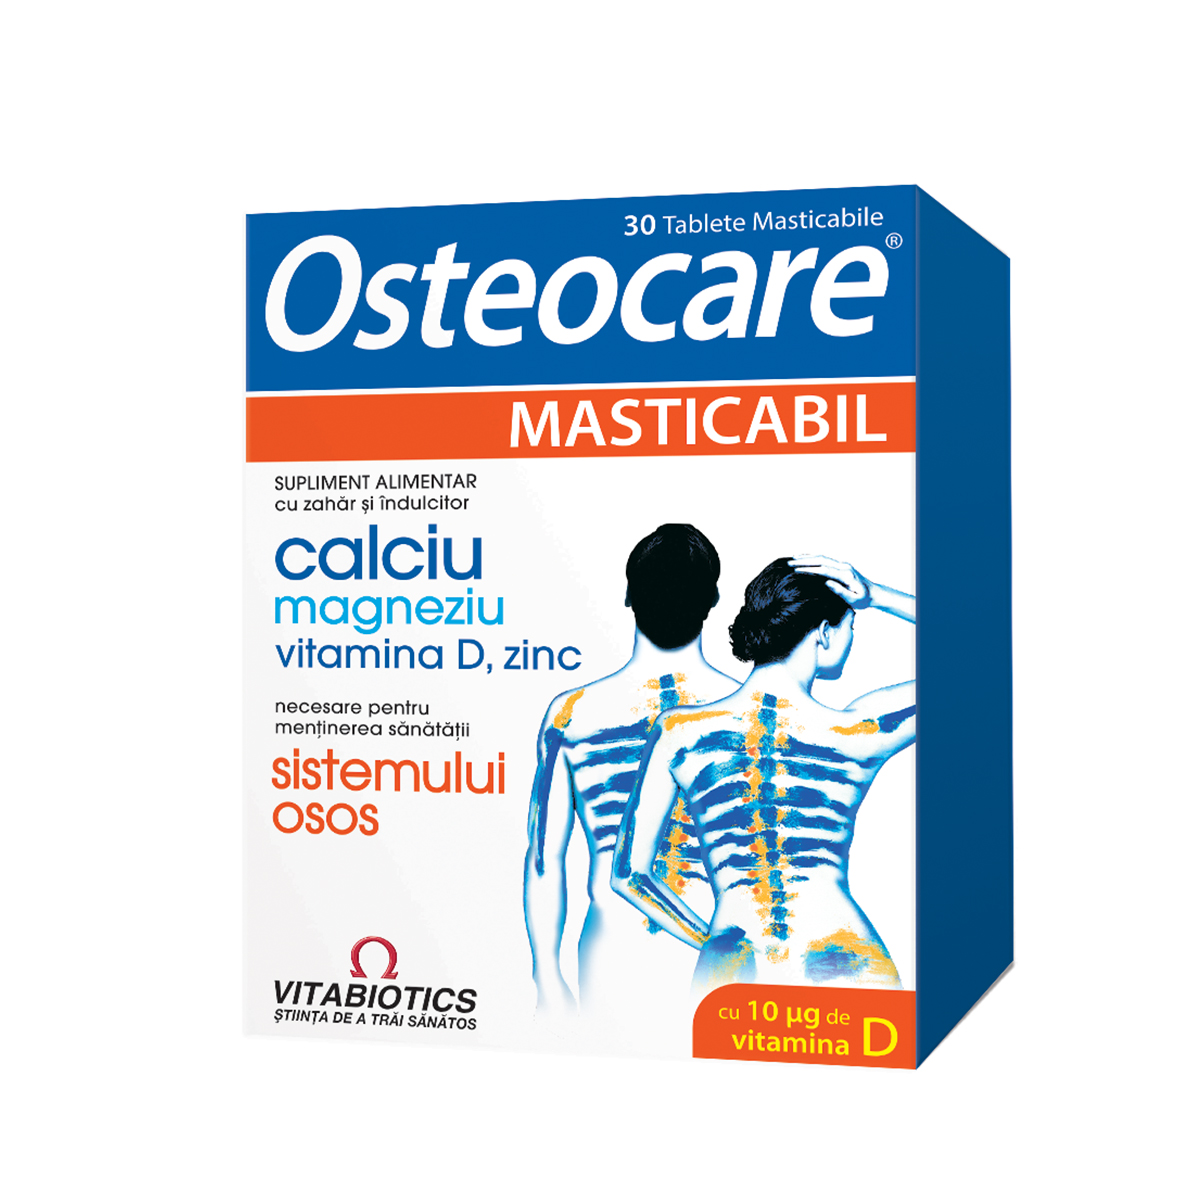 Osteocare masticabil, 30 tablete masticabile, Vitiabiotics